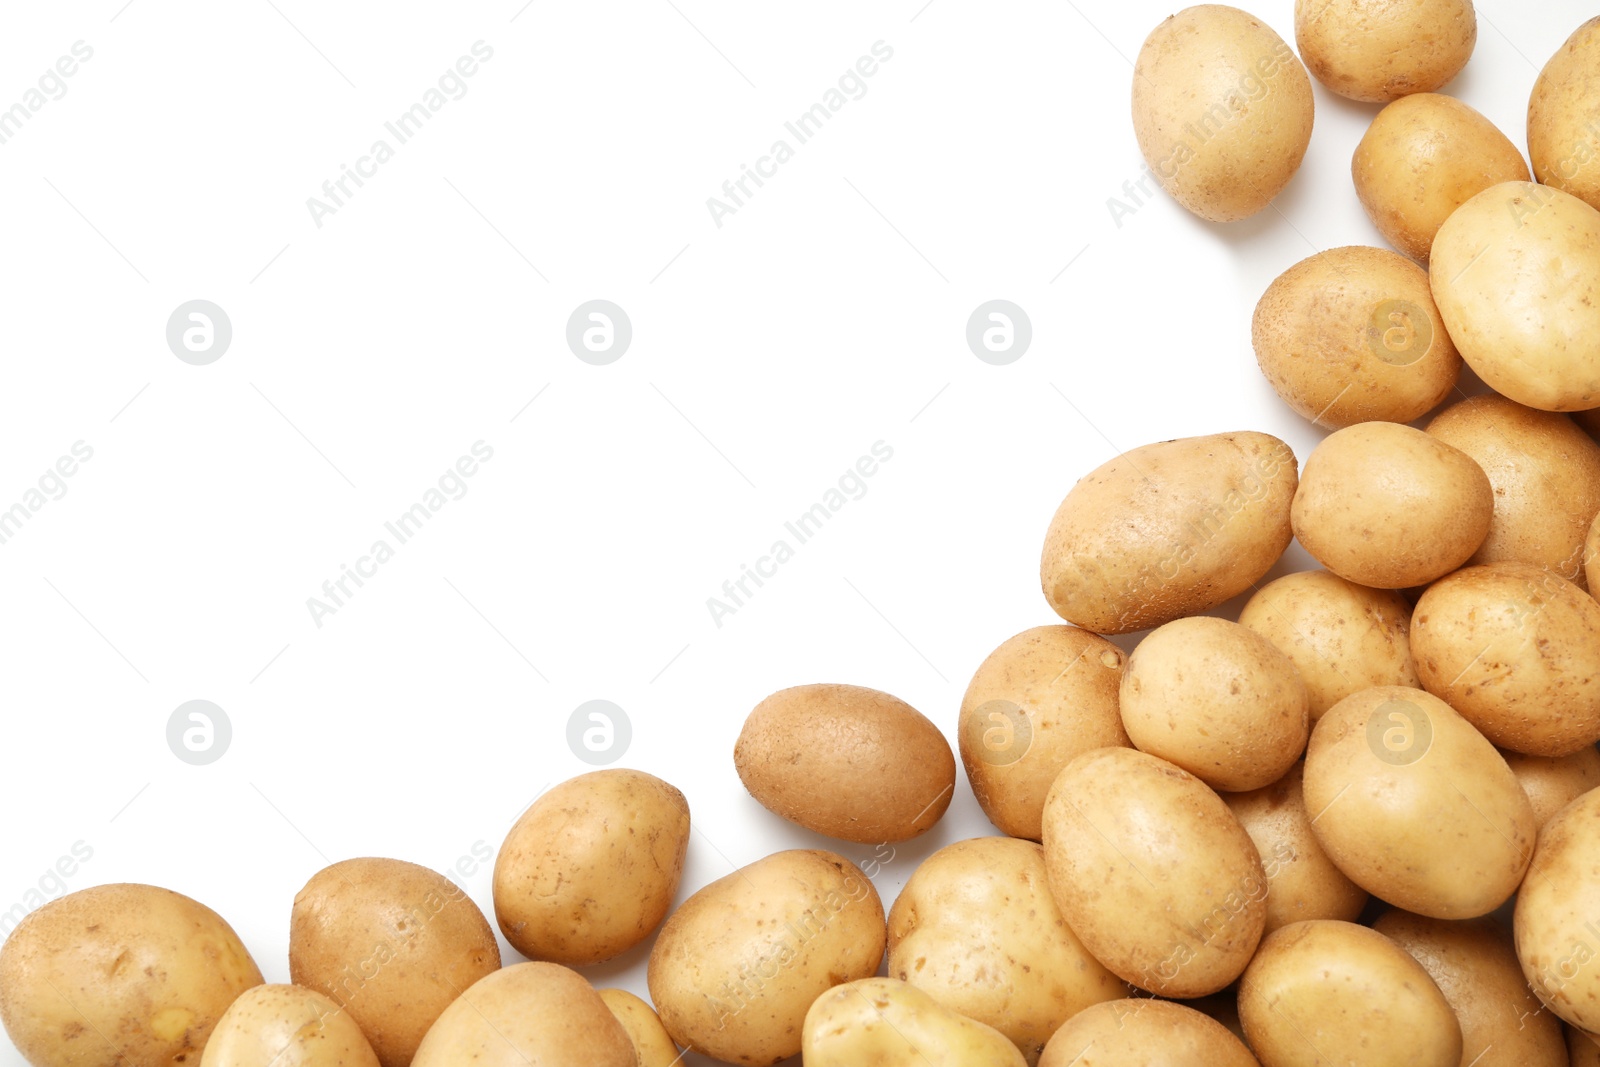 Photo of Raw fresh organic potatoes on white background, top view